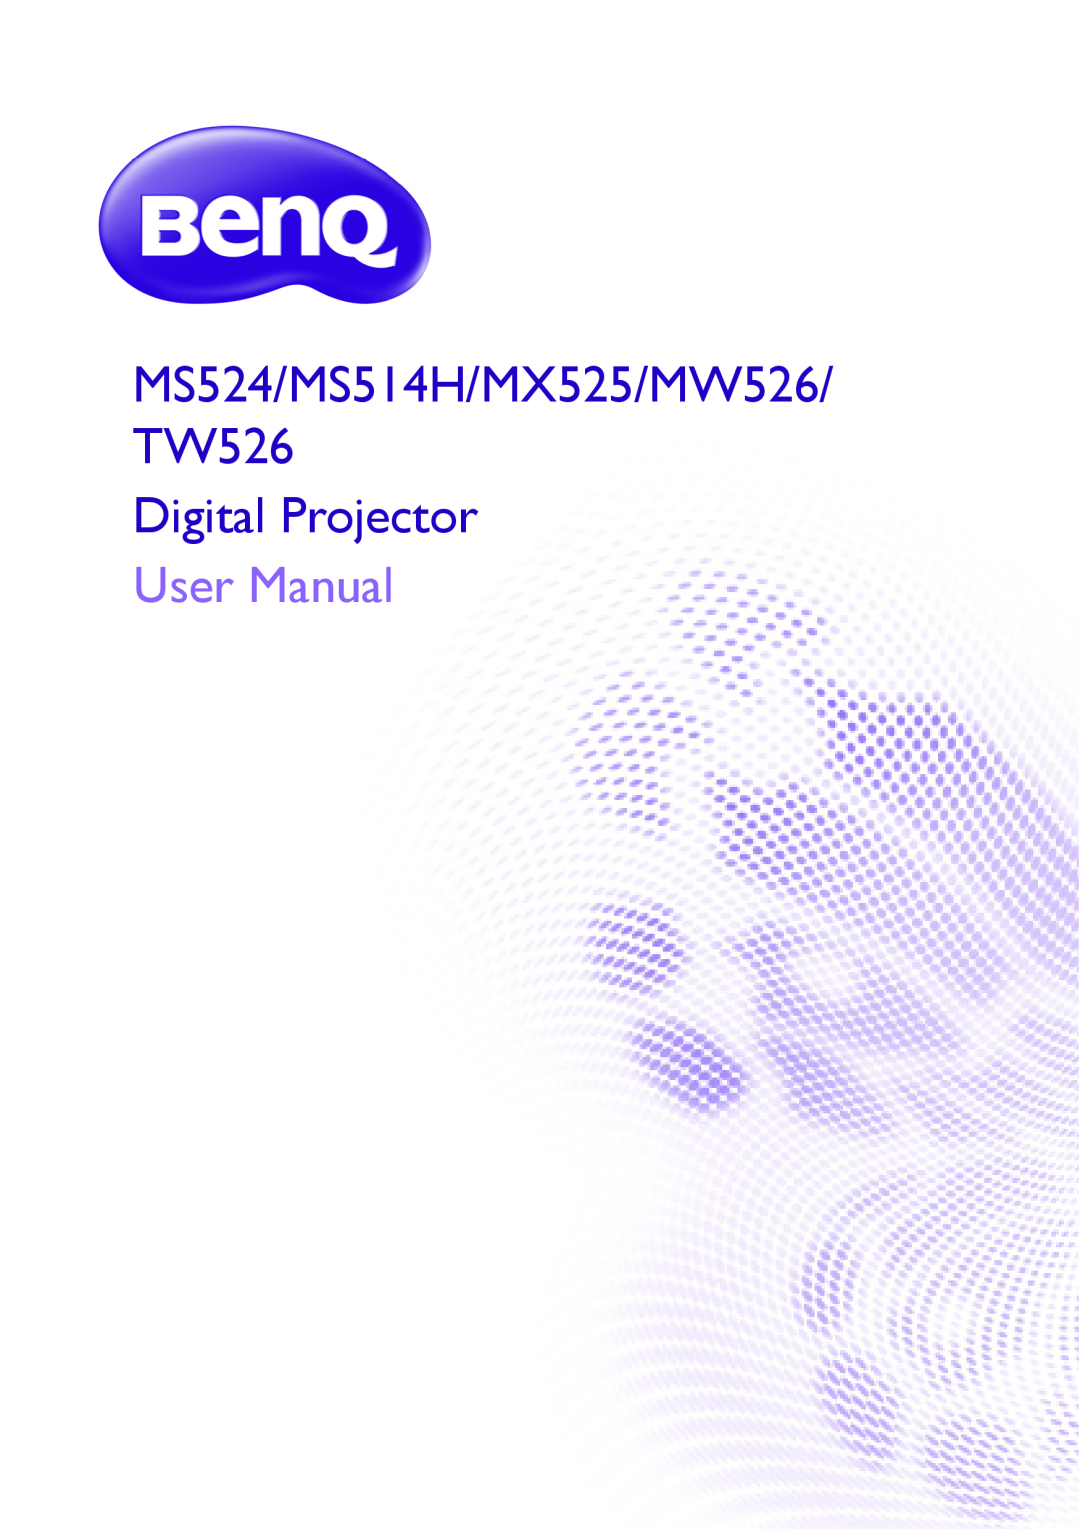 BenQ MS524/MS514H/MX525/MW526/TW526 user manual MS524/MS514H/MX525/MW526 TW526 Digital Projector, User Manual 